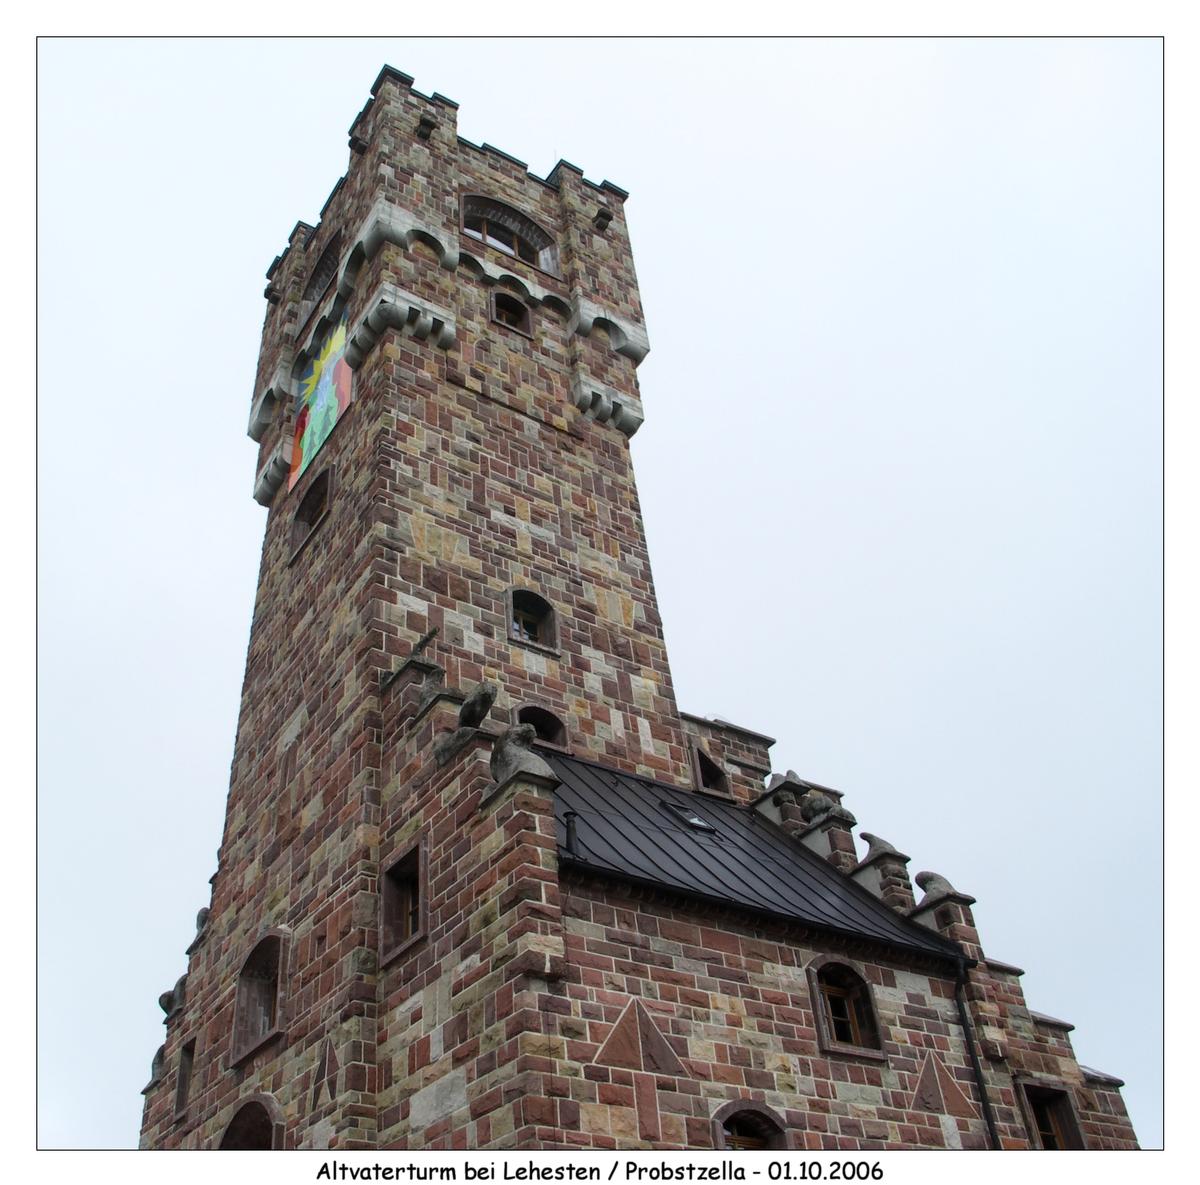 Altvaterturm bei Lehesten 